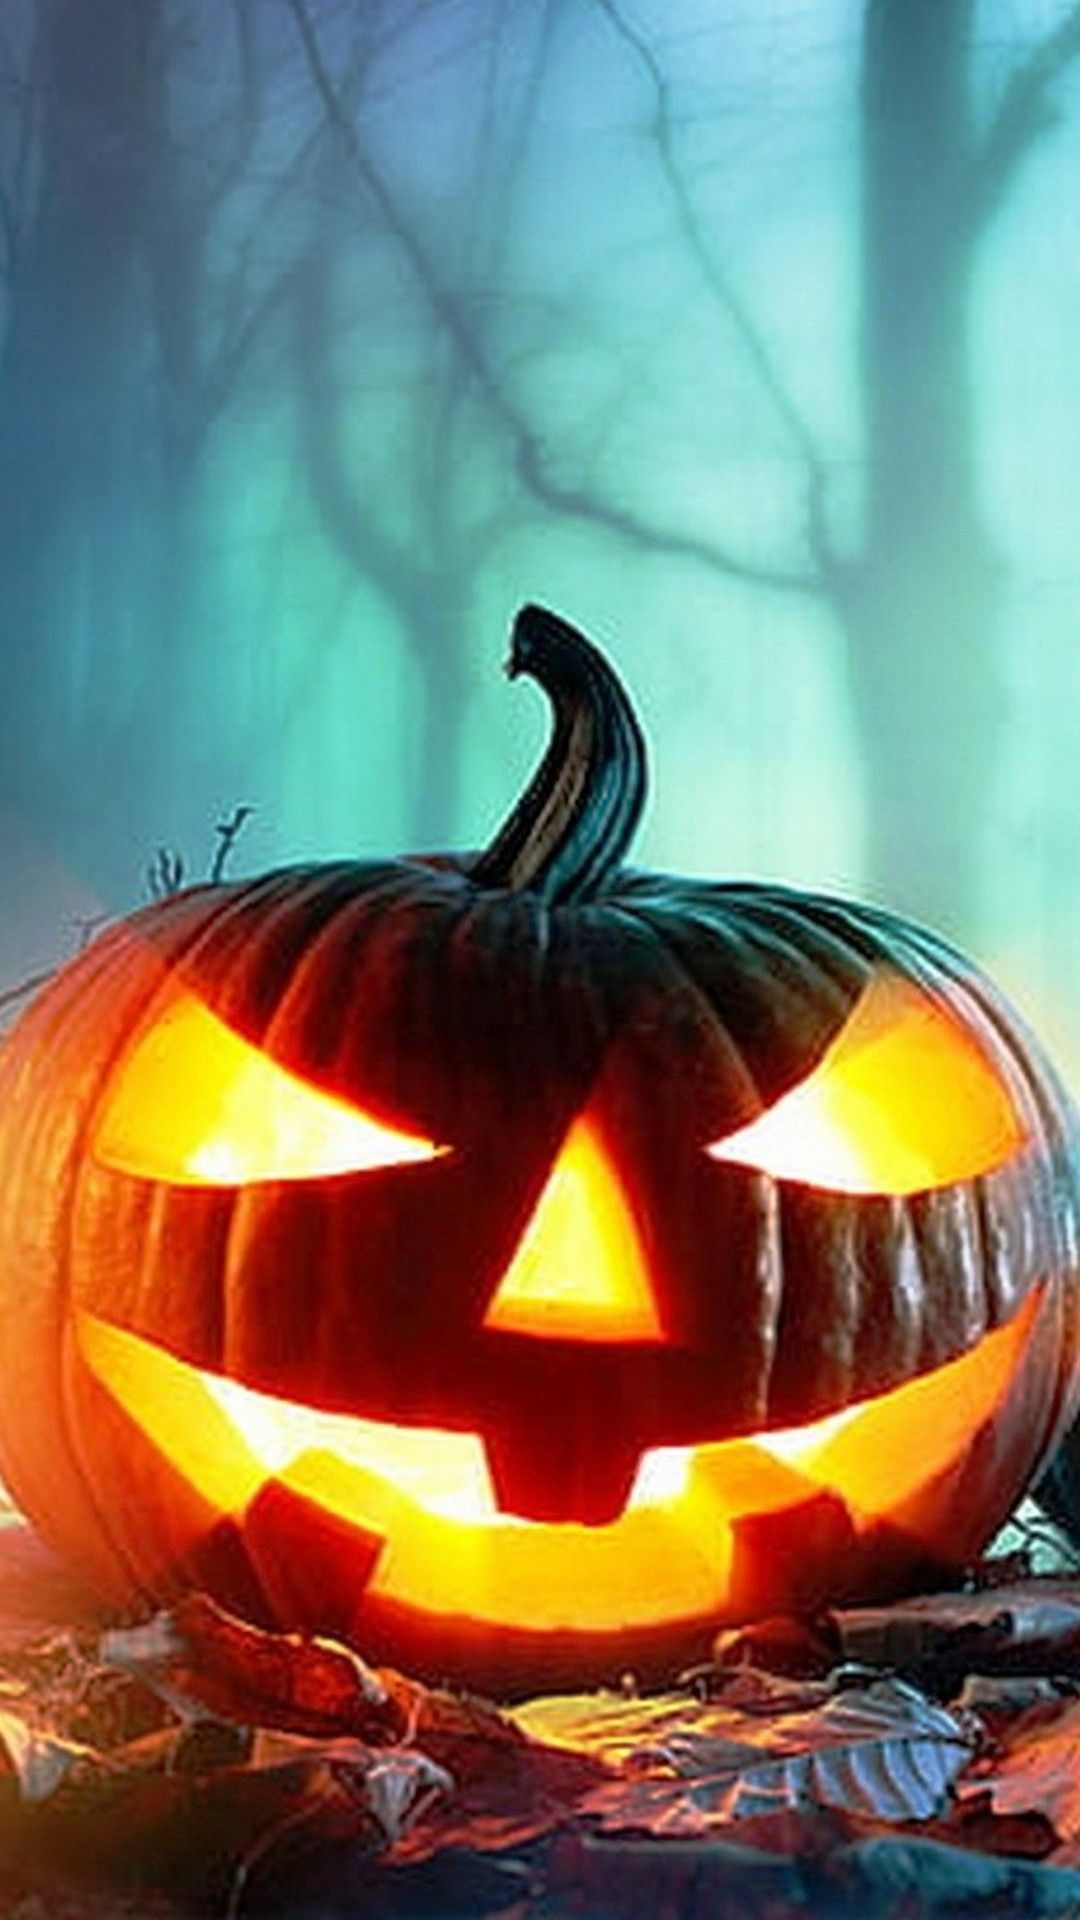 Halloween pumpkin in the forest wallpaper 1080x1920 - Halloween